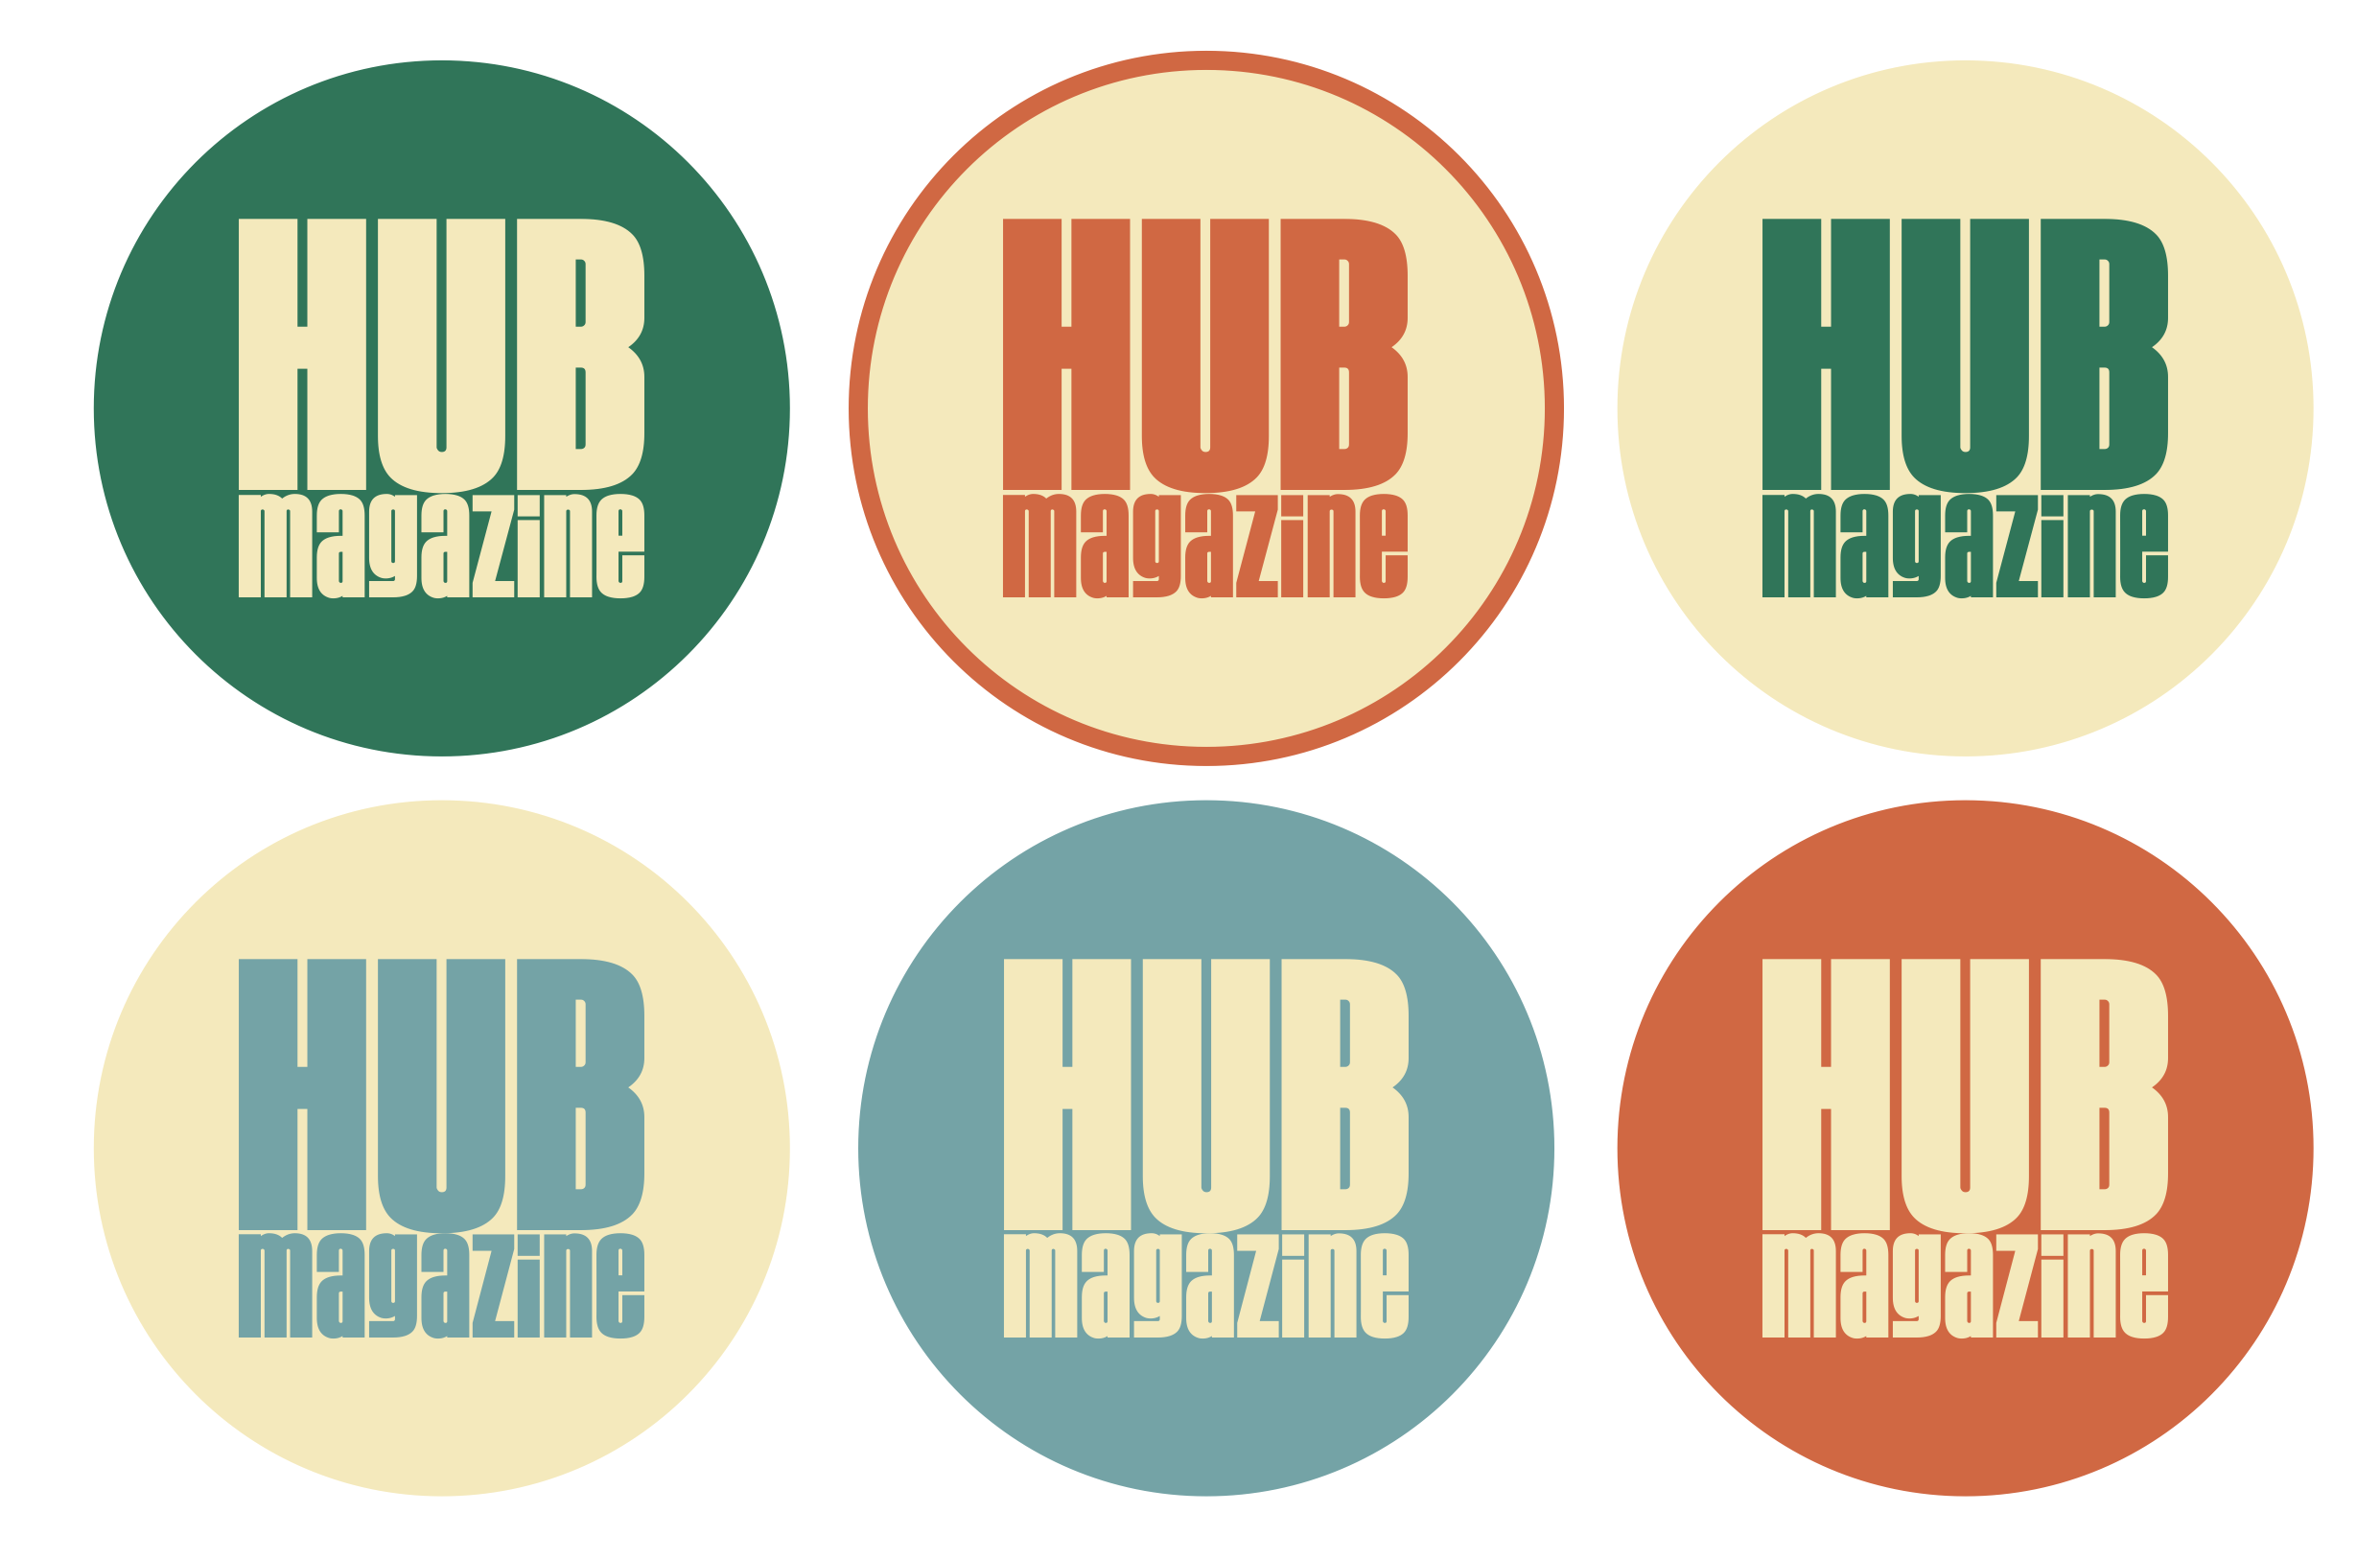 Design Process of: The HUB Magazine Logo